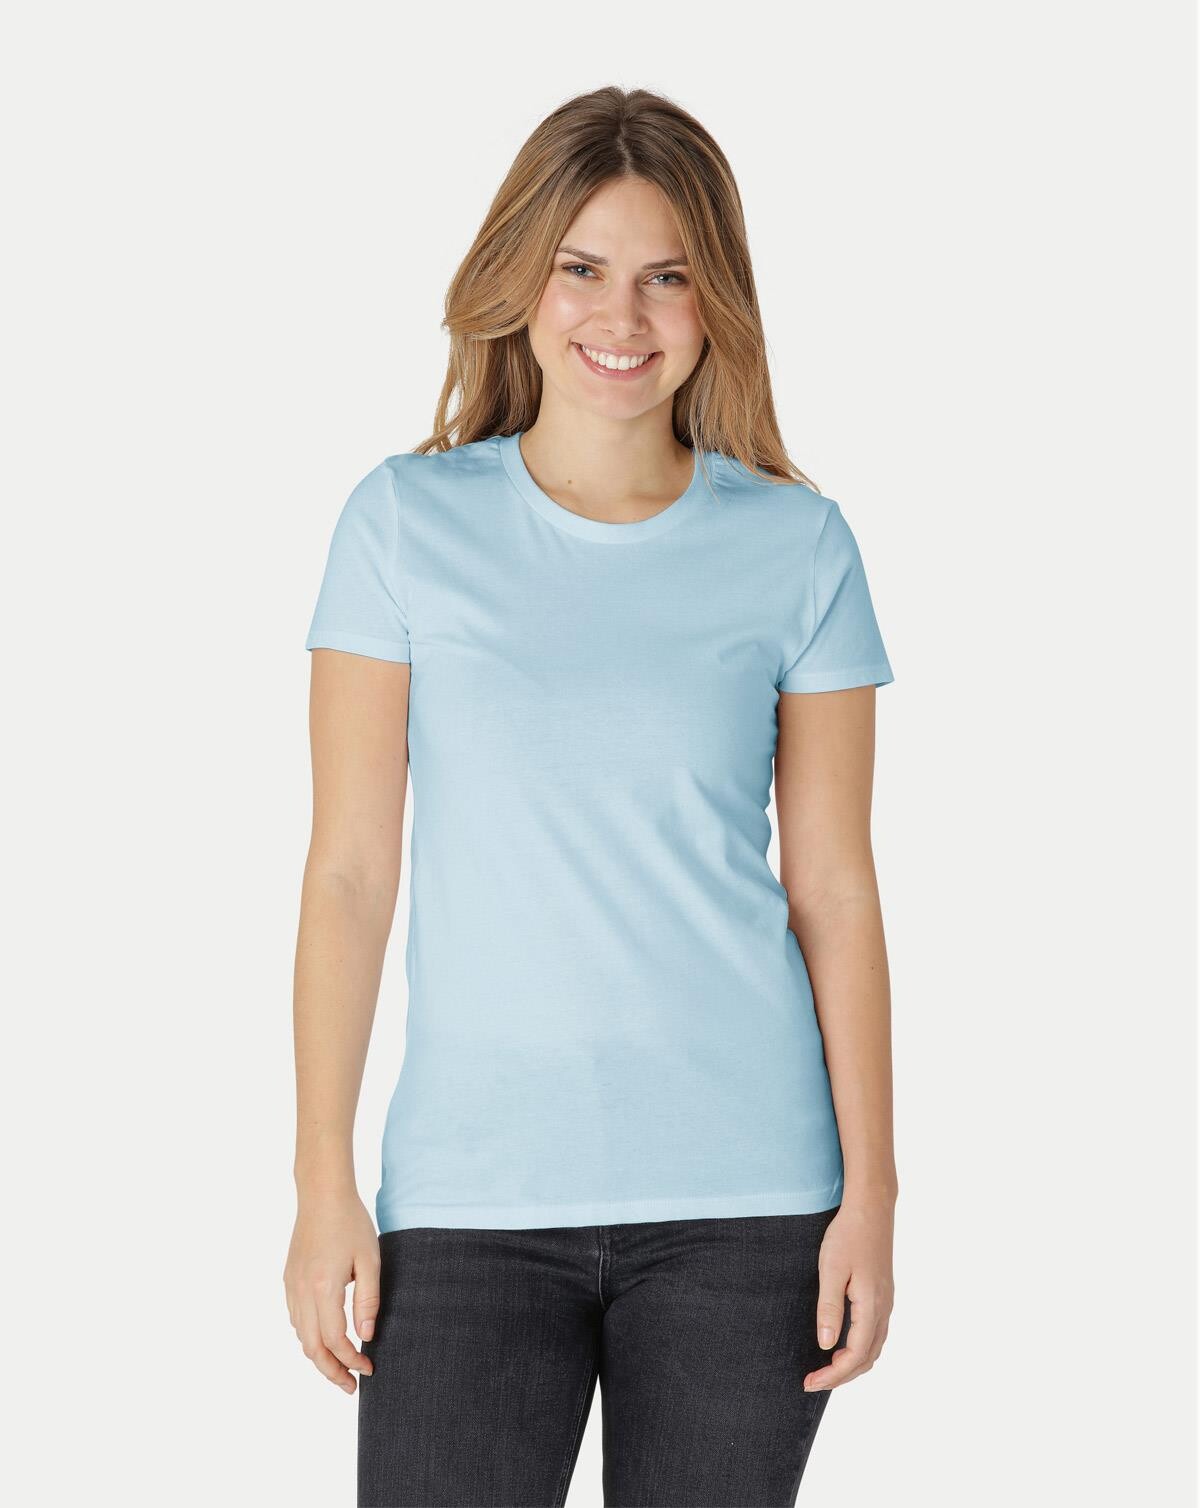 Neutral Økologisk Dame Tætsiddende T-Shirt (Lyseblå, S)